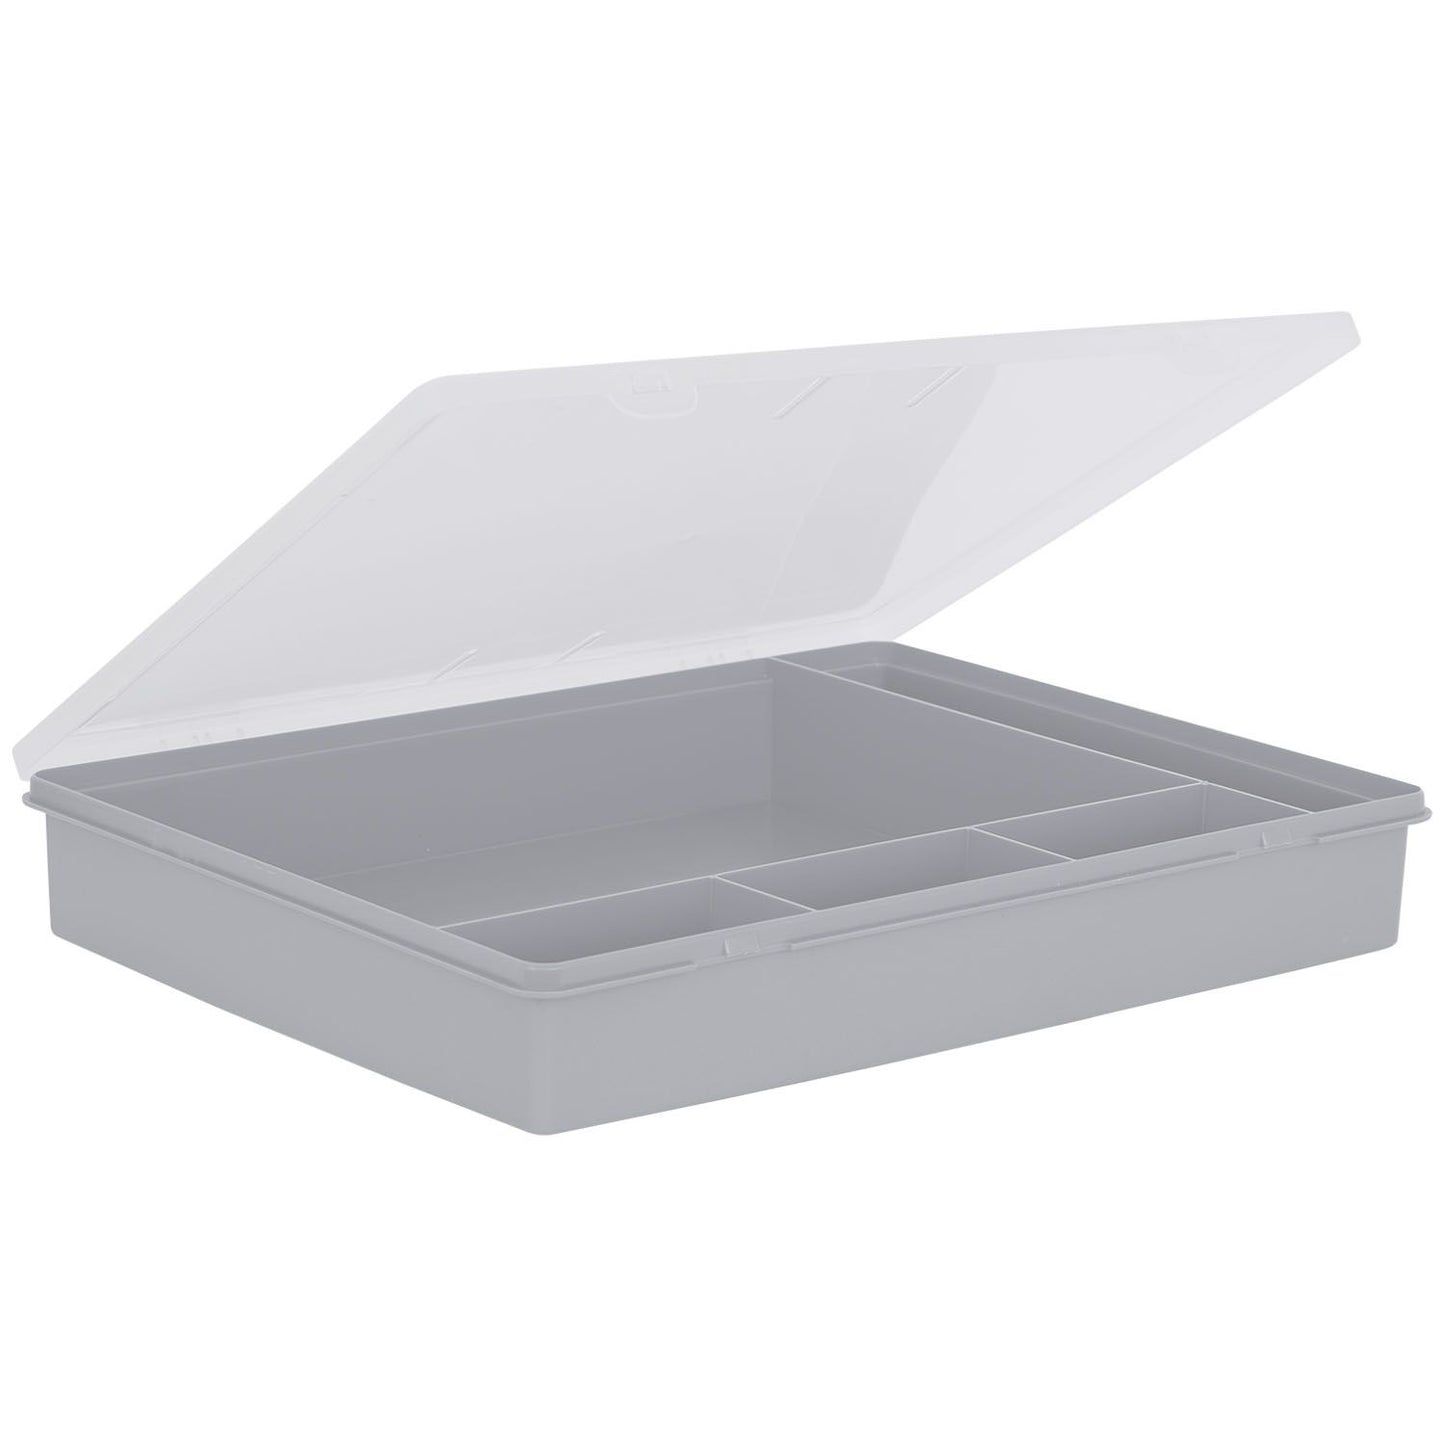 5 Division Plastic A4 Organiser Box, Grey/Clear PLEASE READ THE PRODUCT DESCRIPTION BELOW